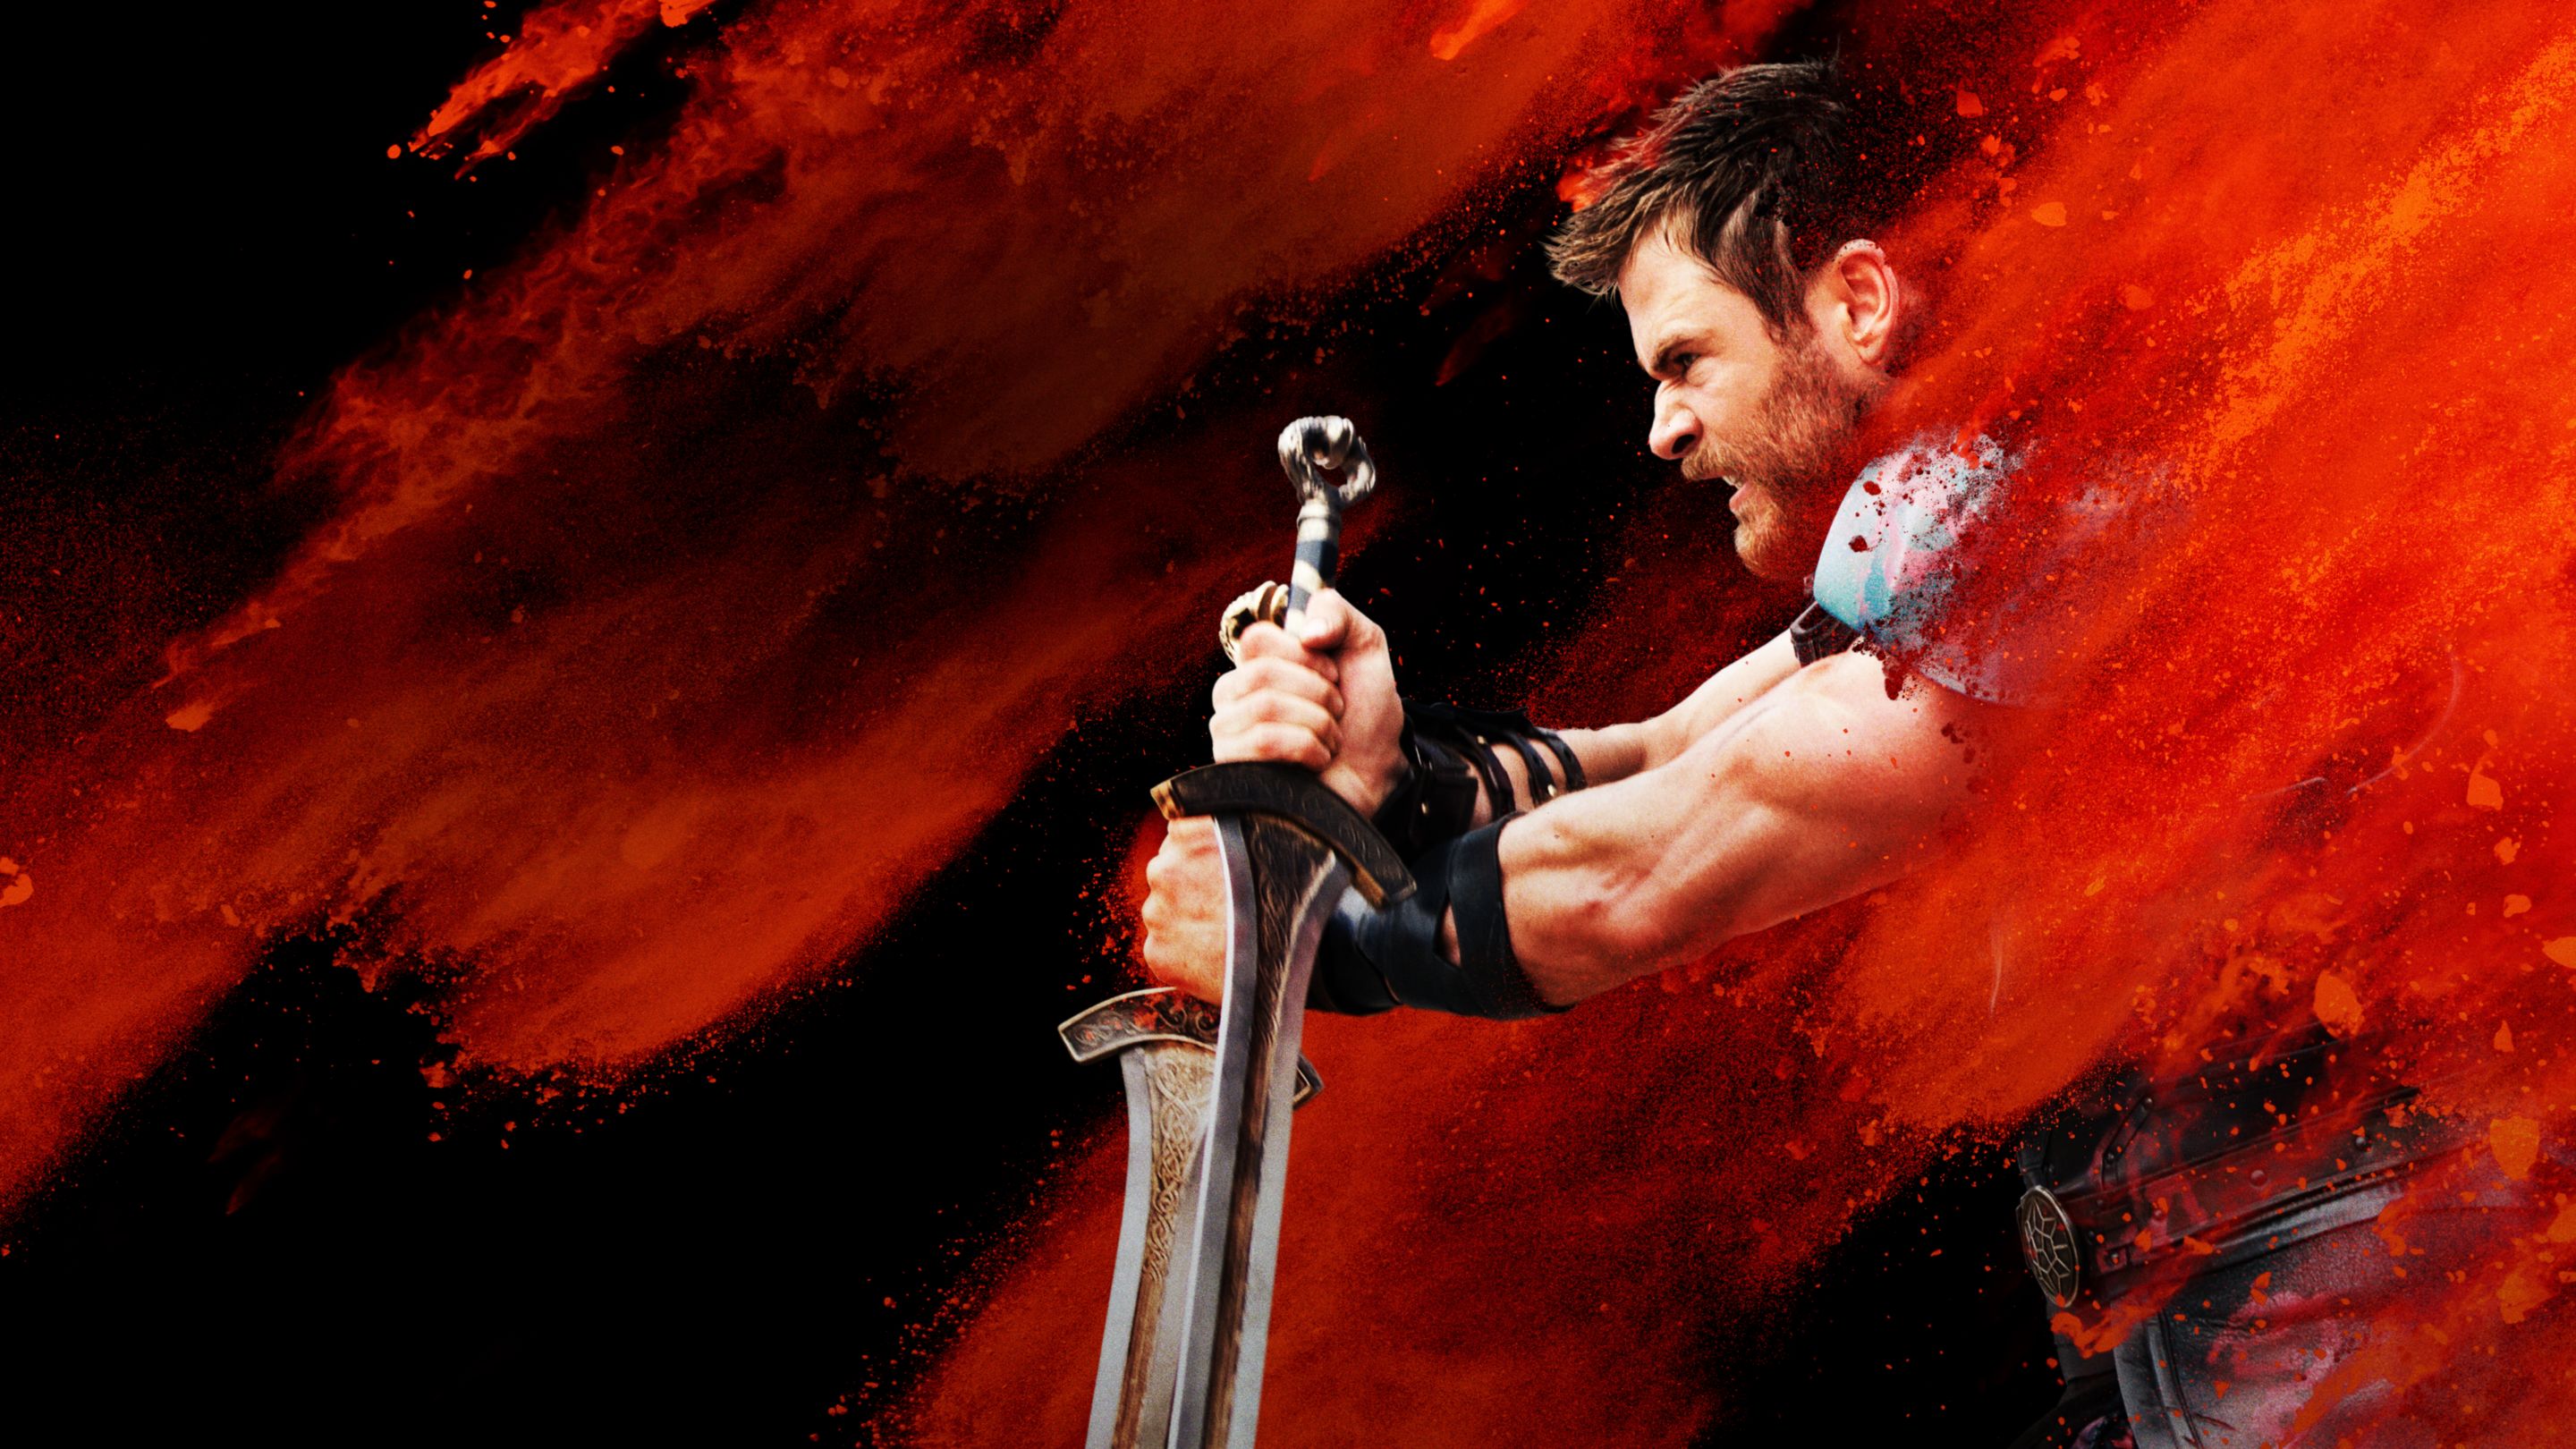 Watch Marvel Studios' Thor: Ragnarok